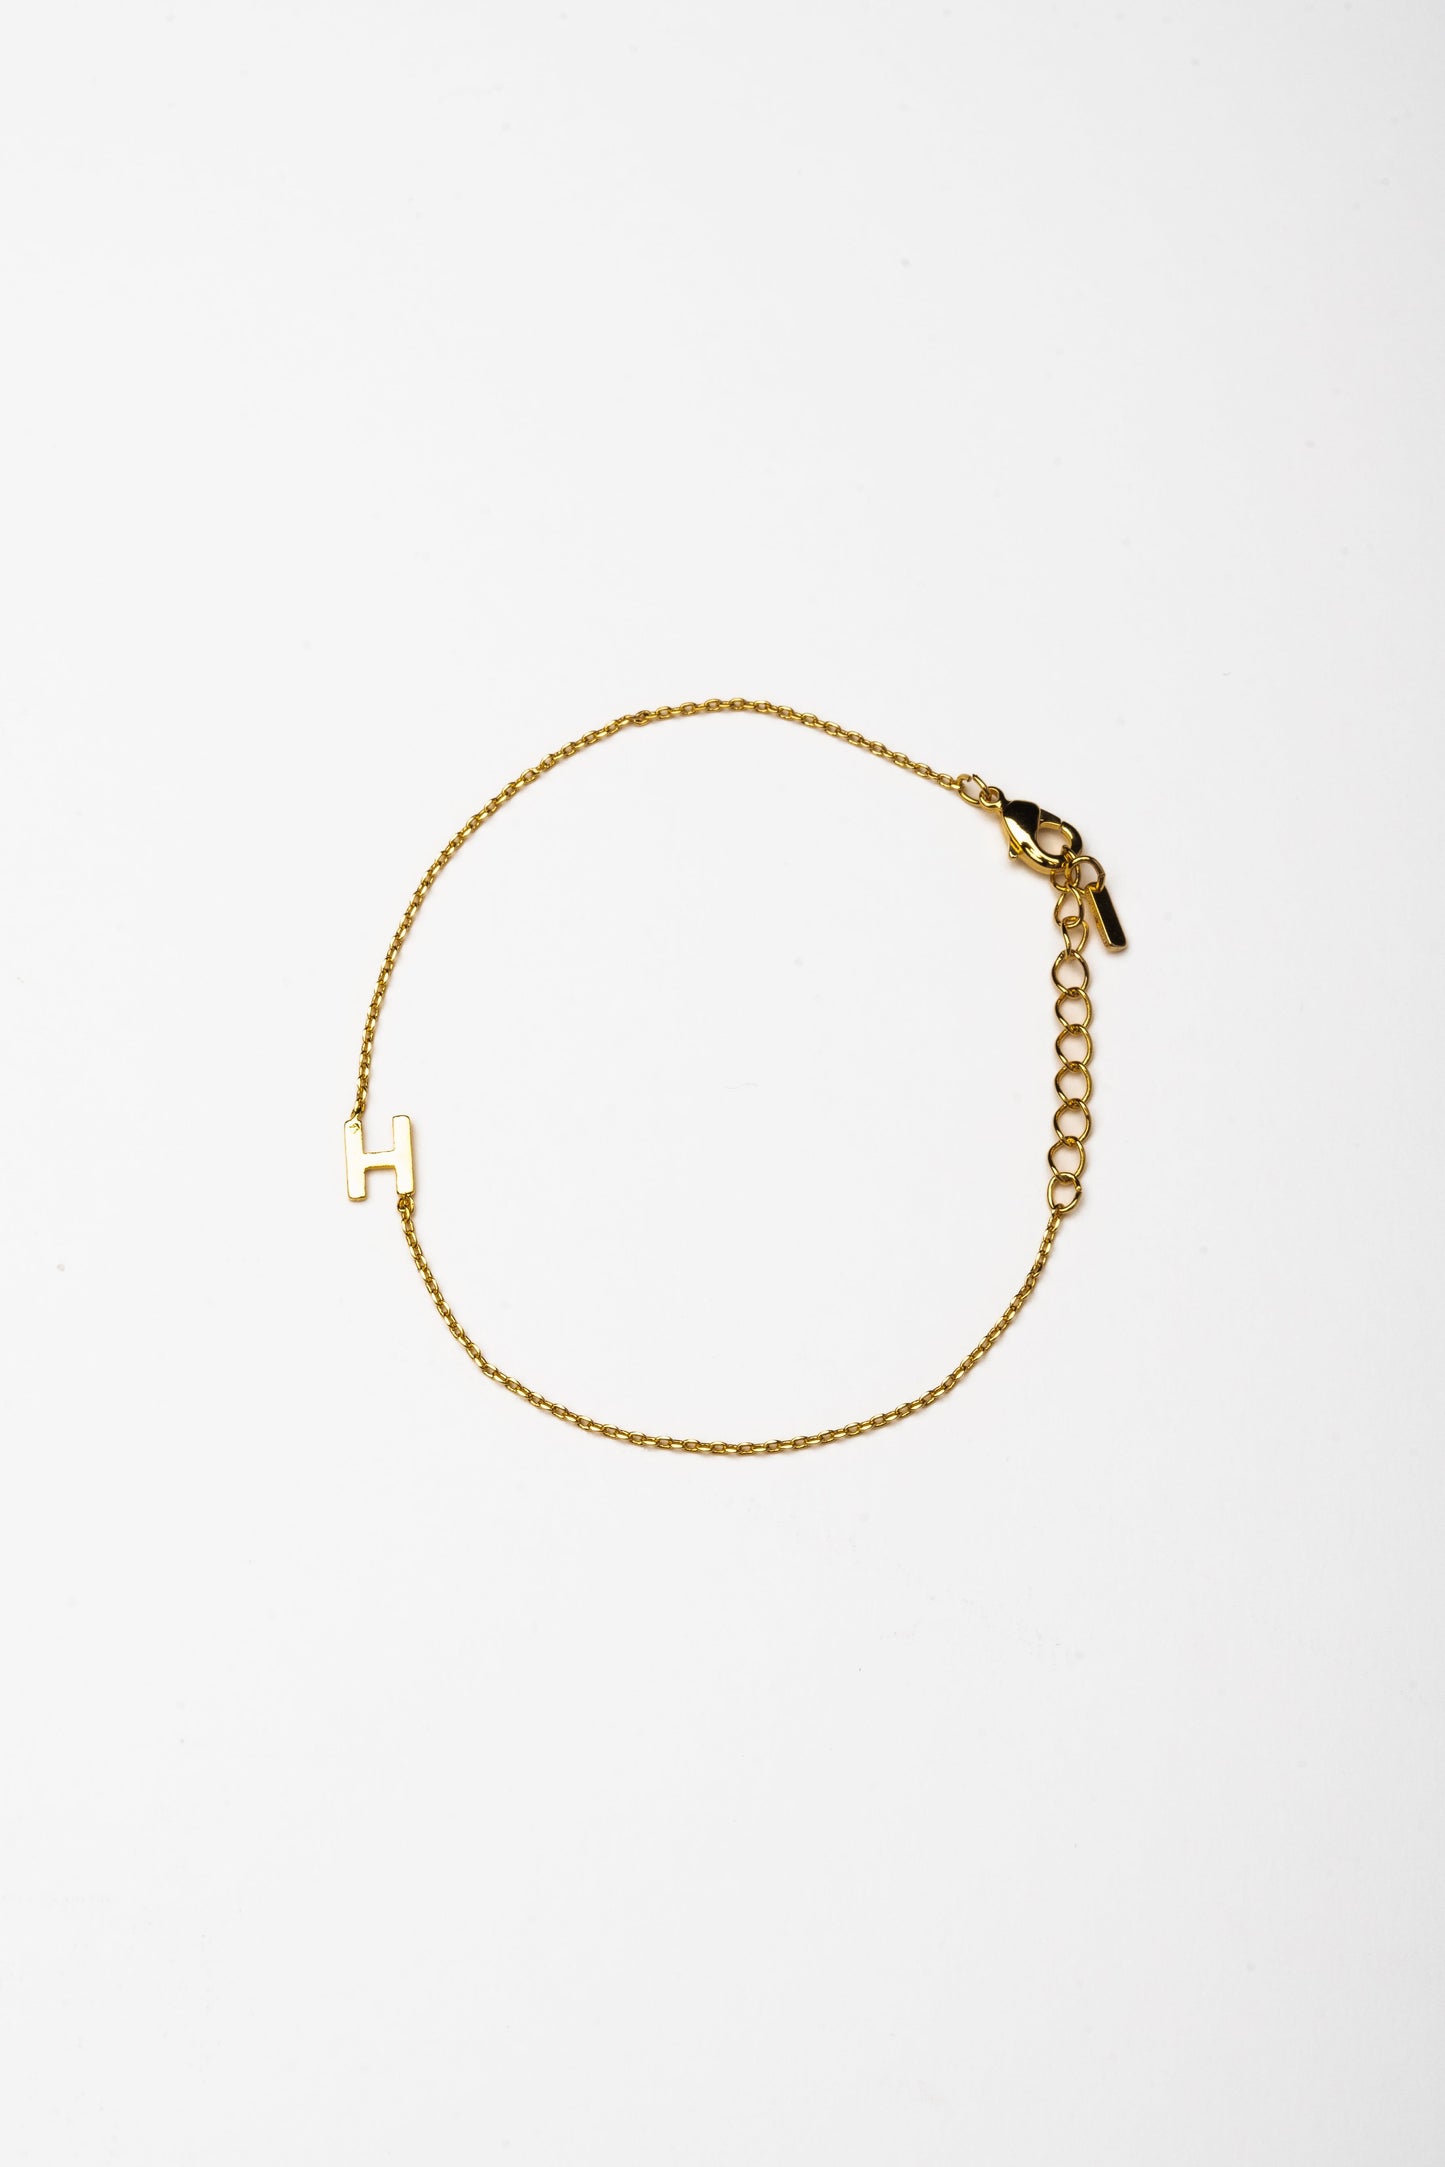 Cove Initial Bracelet WOMEN'S BRACELET Cove Accessories 18k Gold Plated 7" + 1" extender H